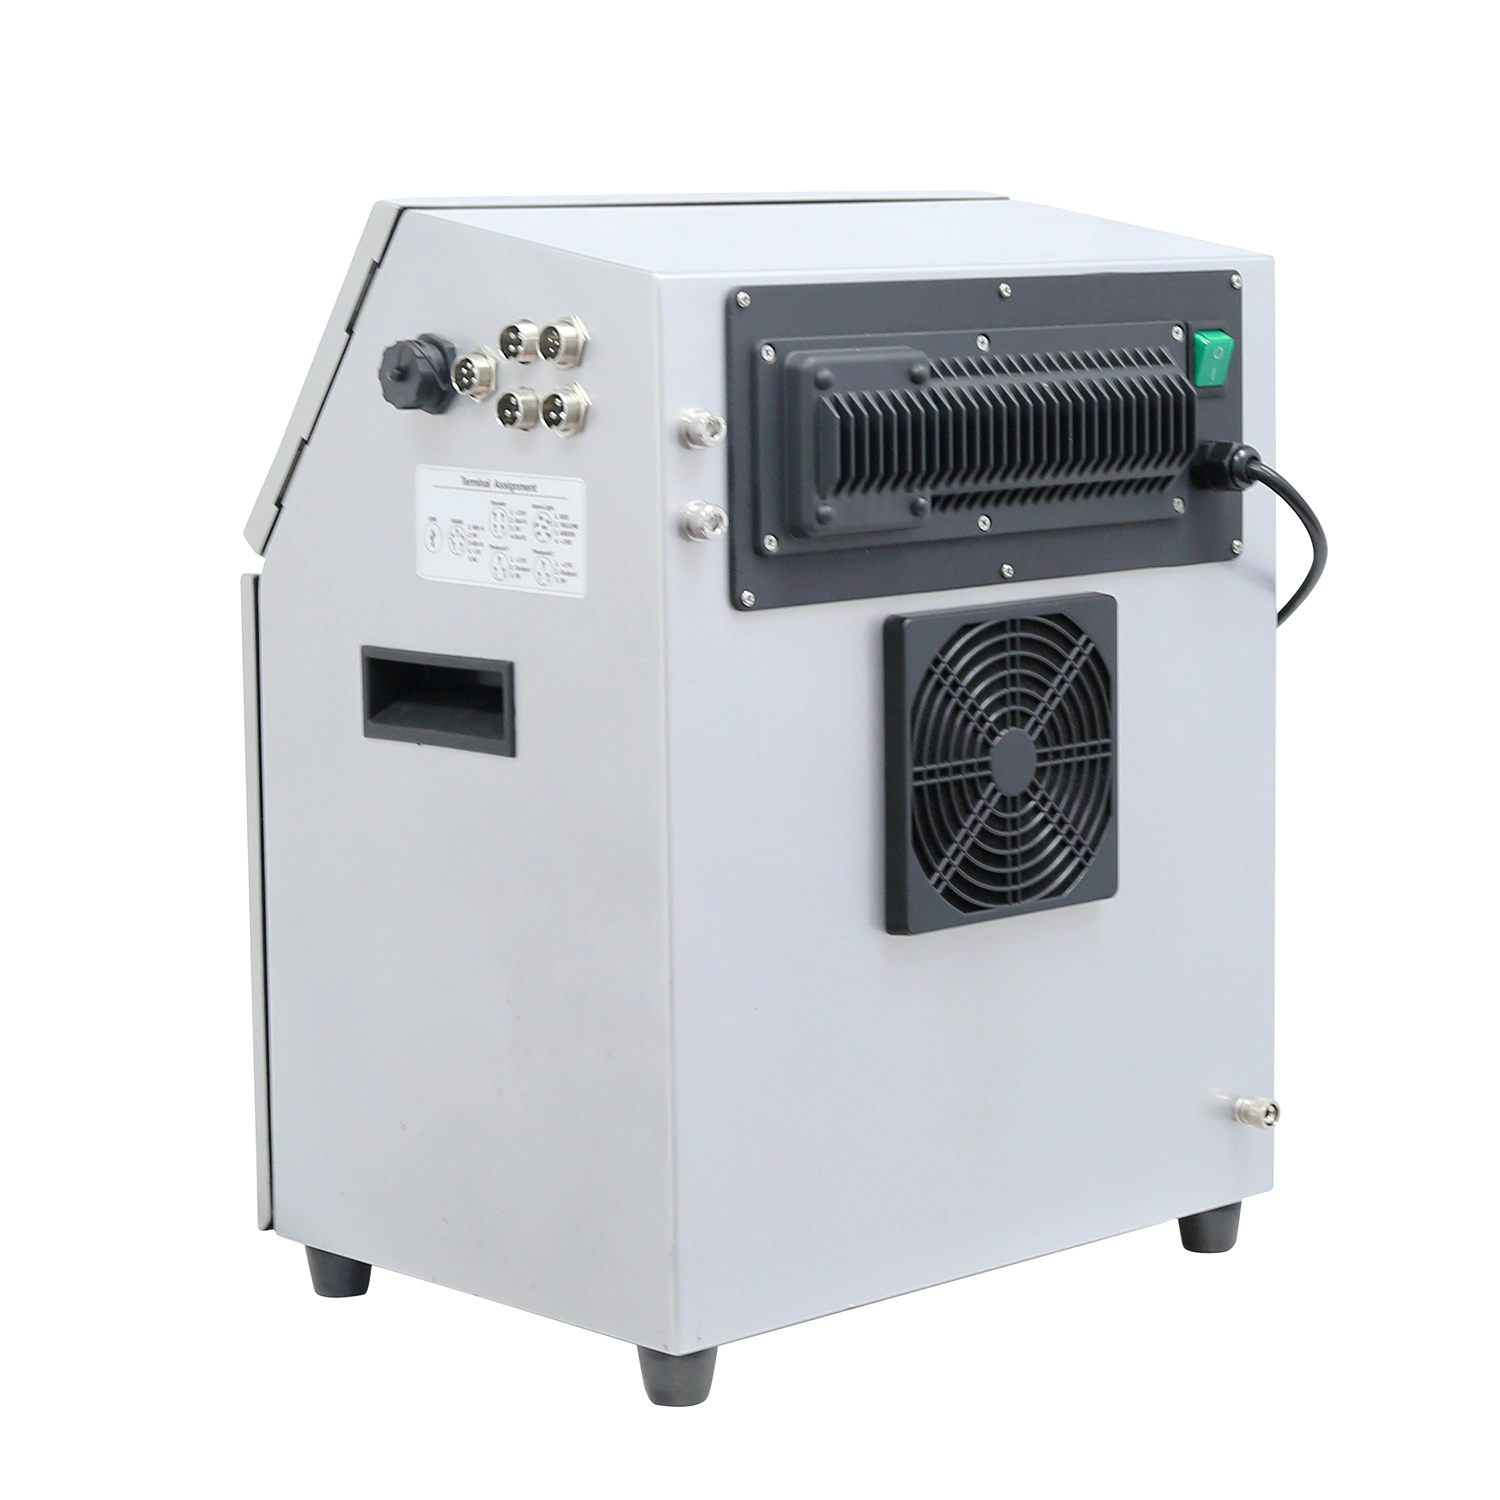 Leadtech Lt800 Cartridge Printer Coding Printing Machine